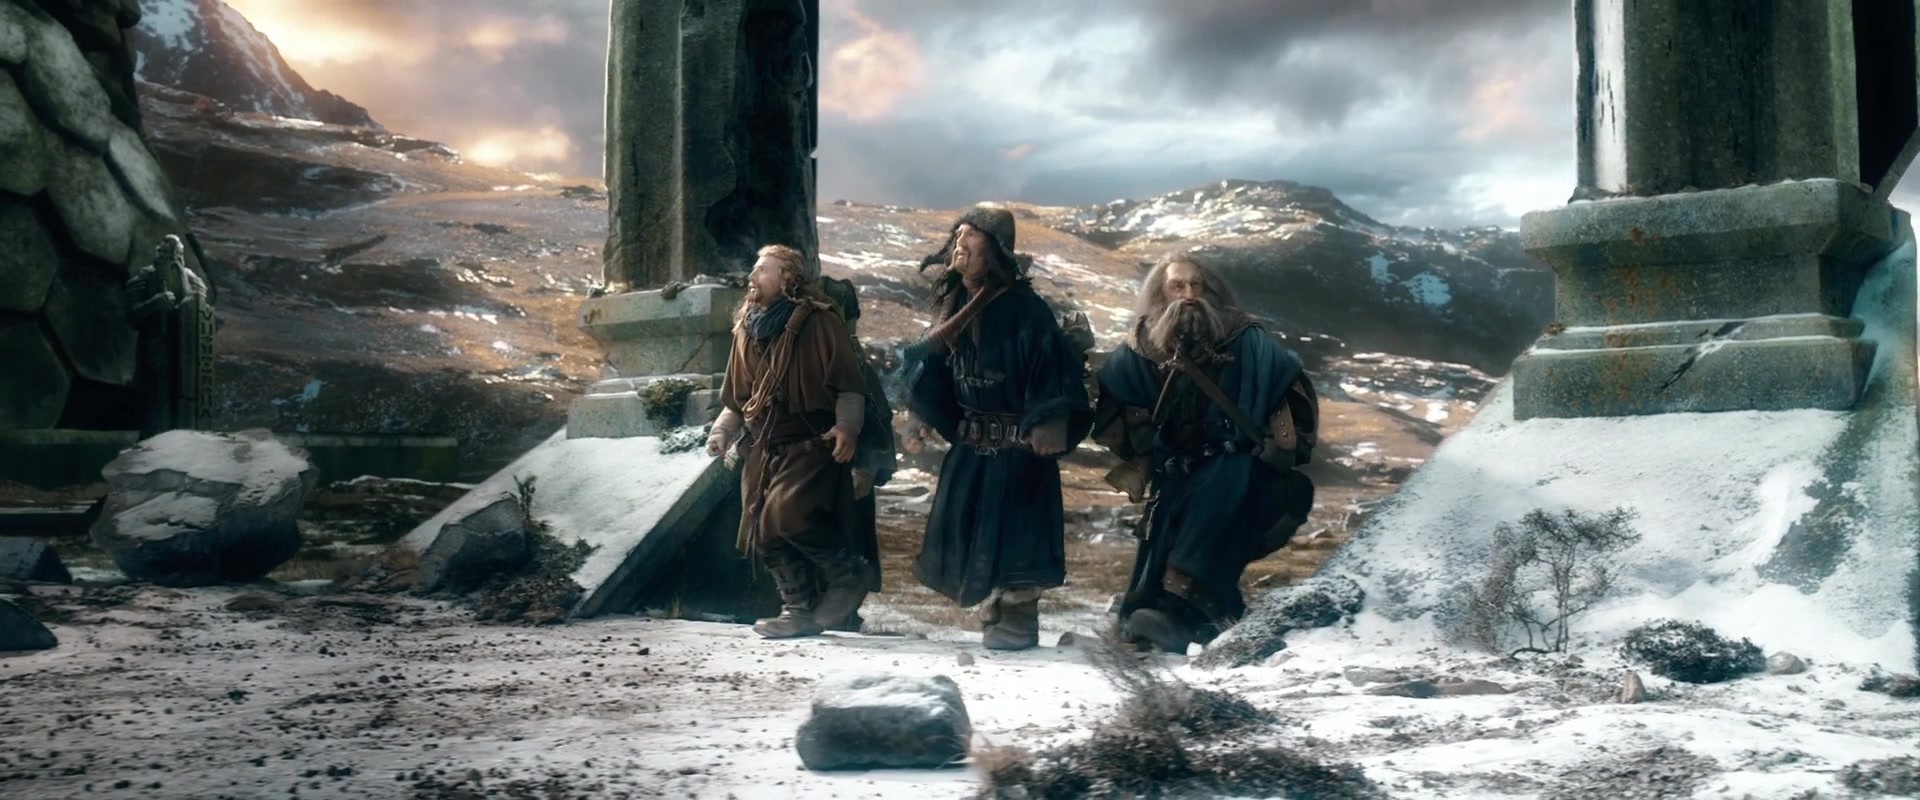 Хоббит битва пяти воинств Фродо